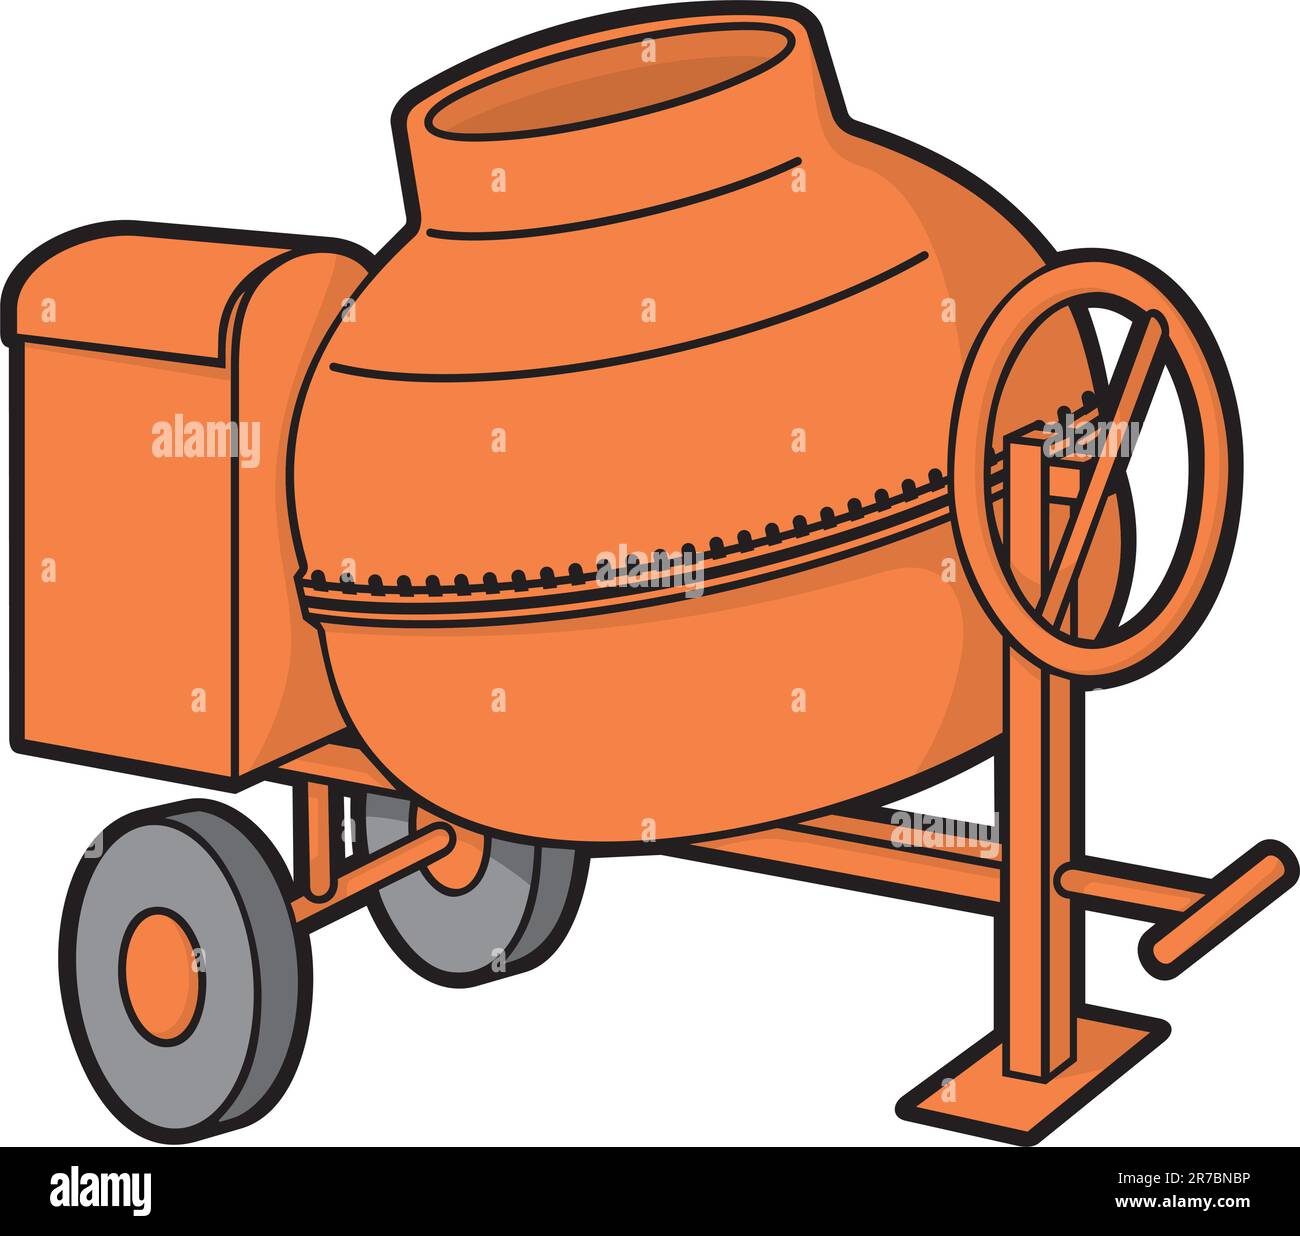 Orange mini concrete mixer with wheels illustration isolated on white background. Stock Vector